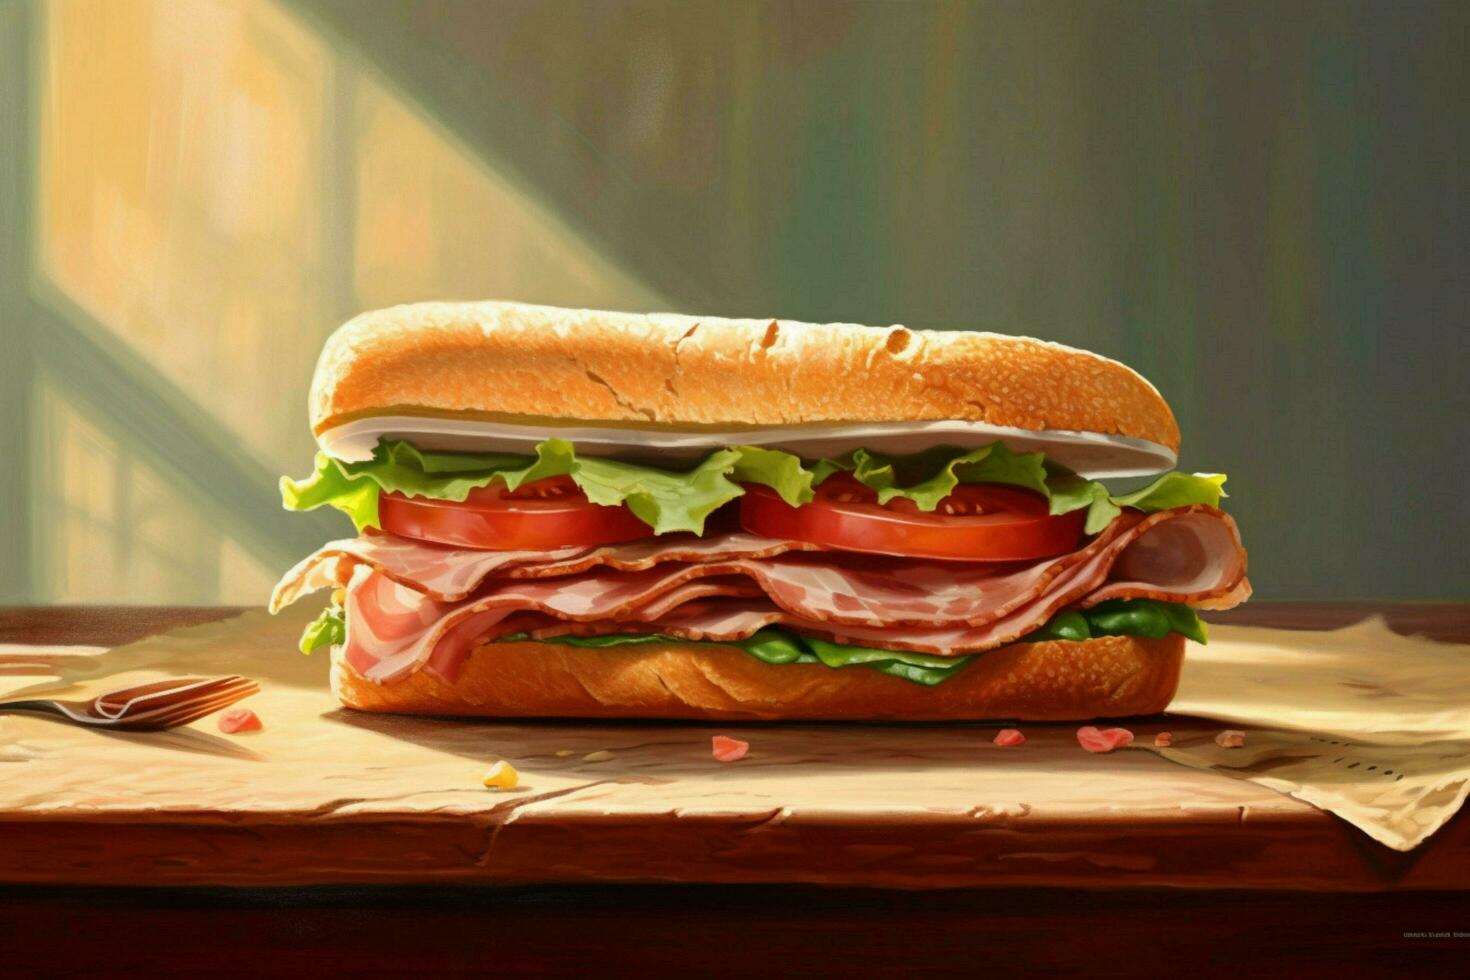 a sandwich made of spanish serrano ham on a table photo